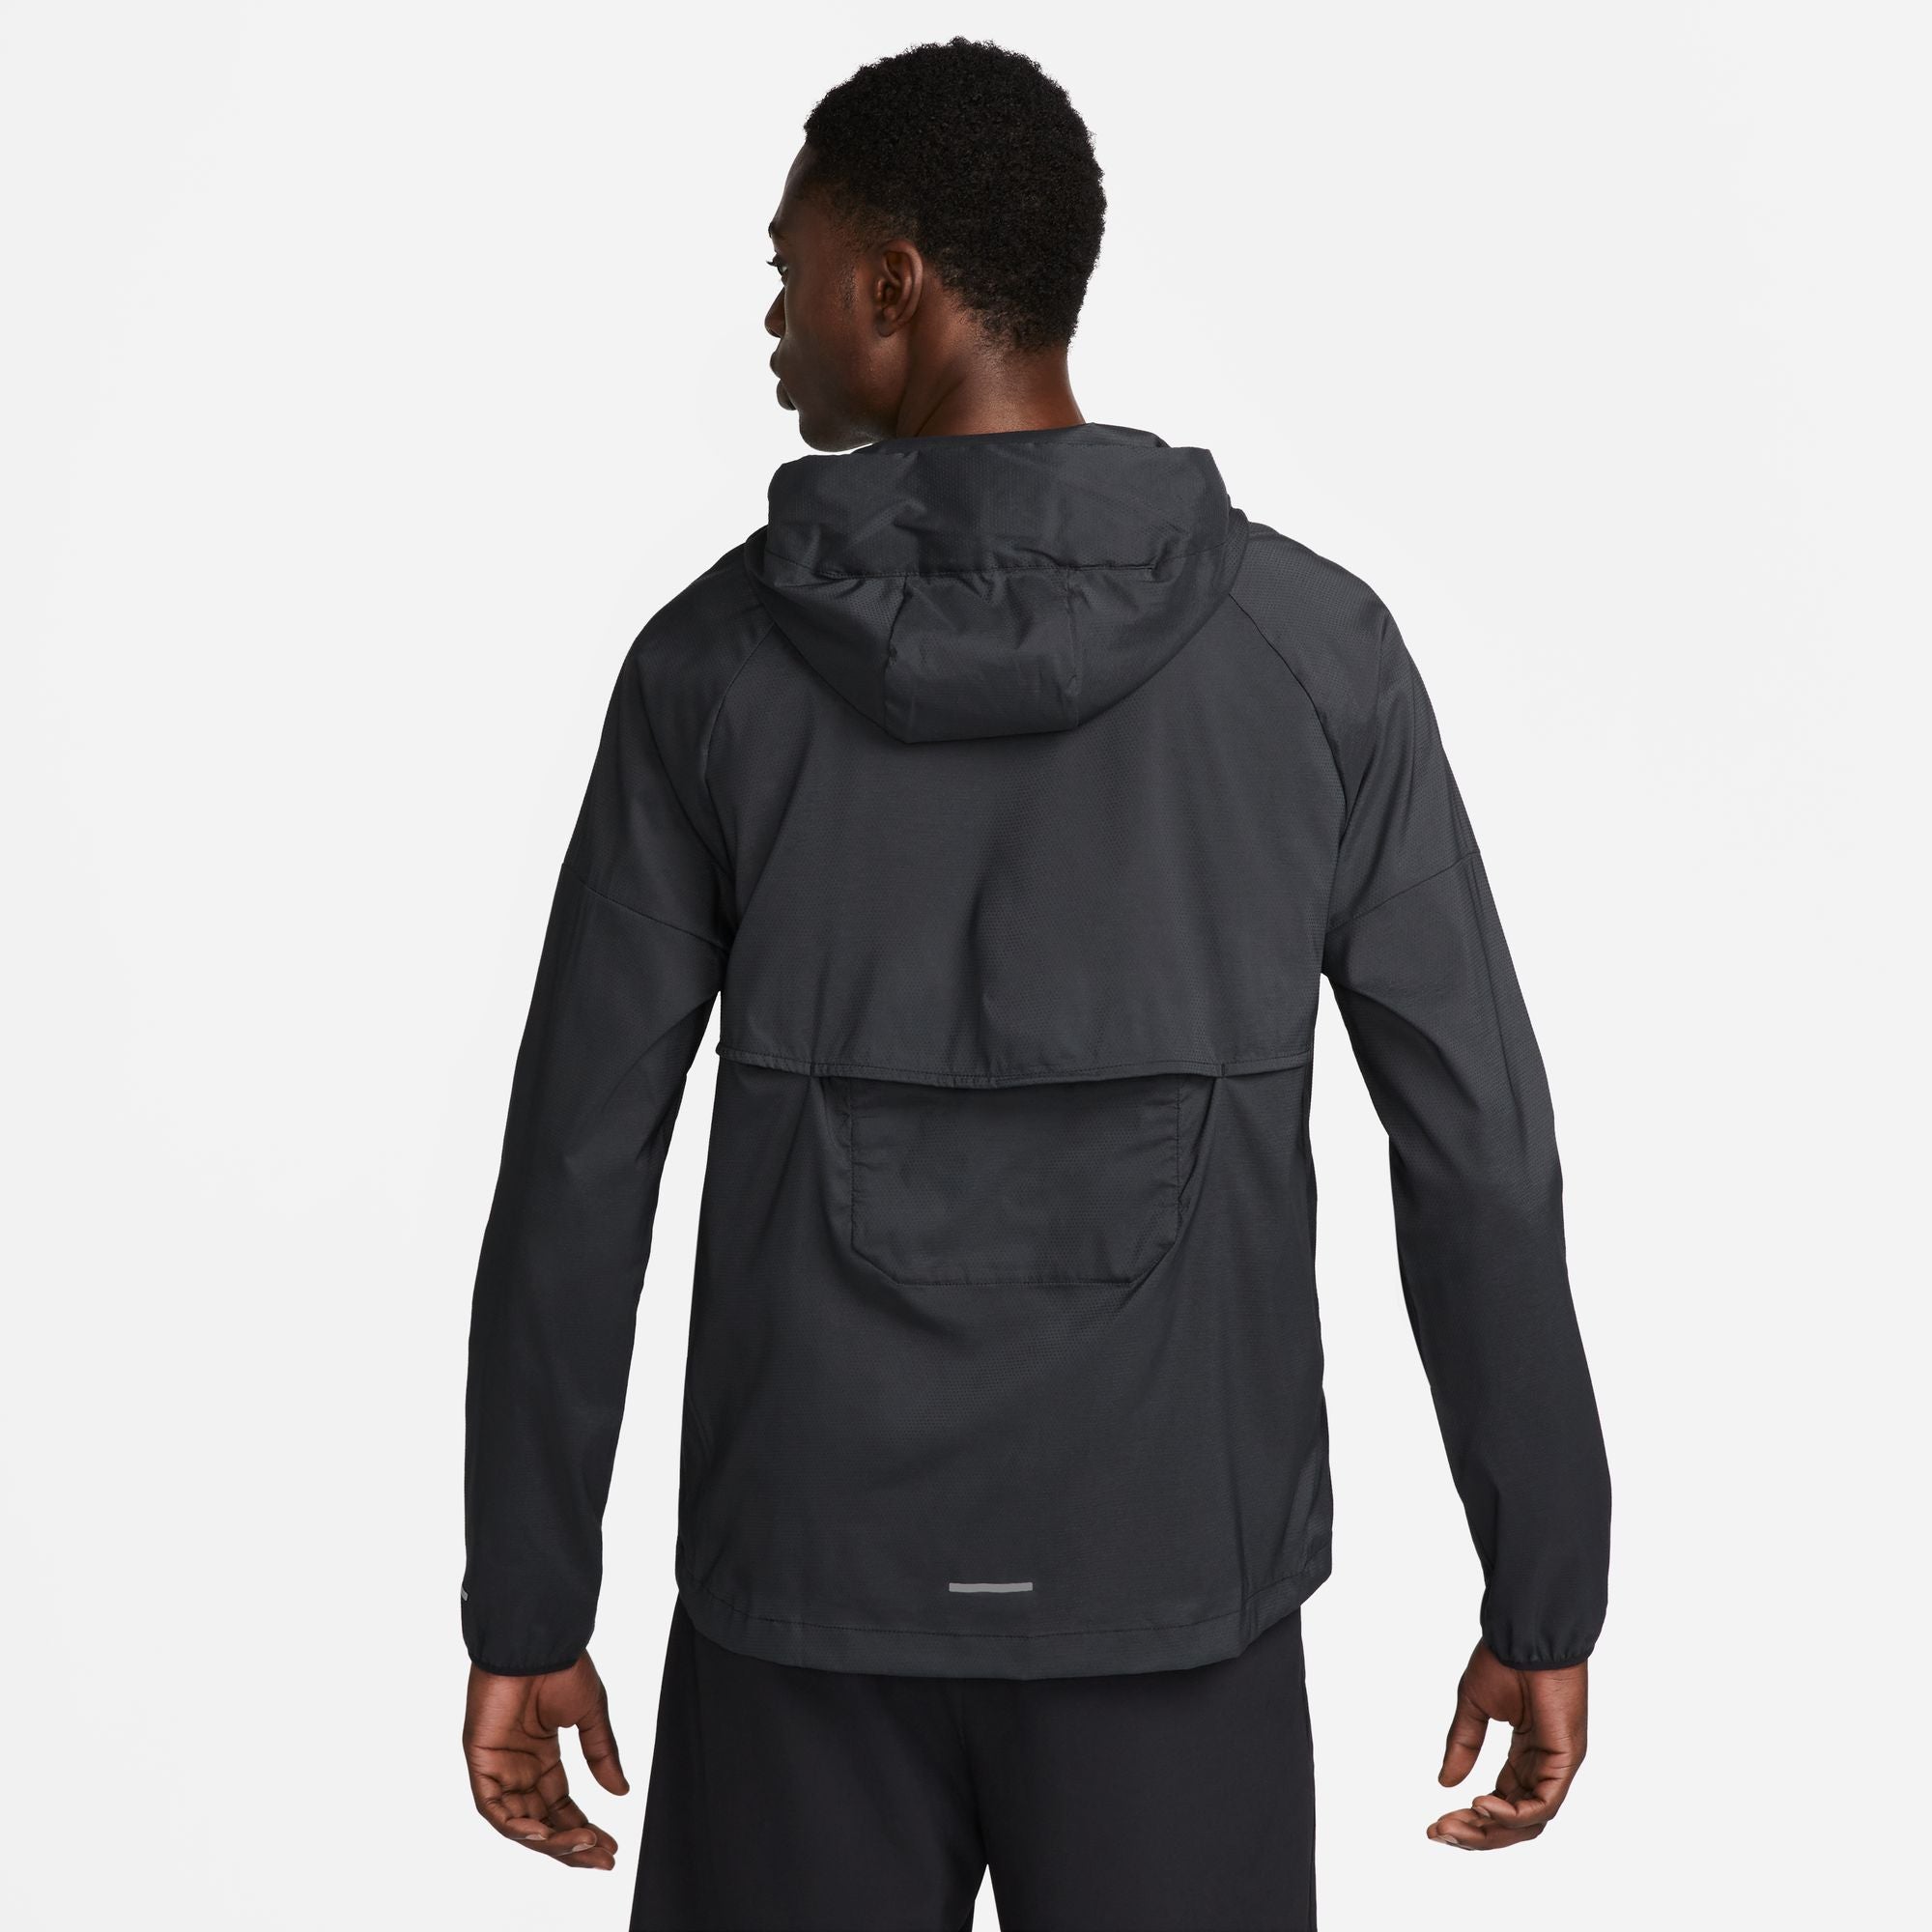 Nike Windrunner Windbreaker Jacket - Black